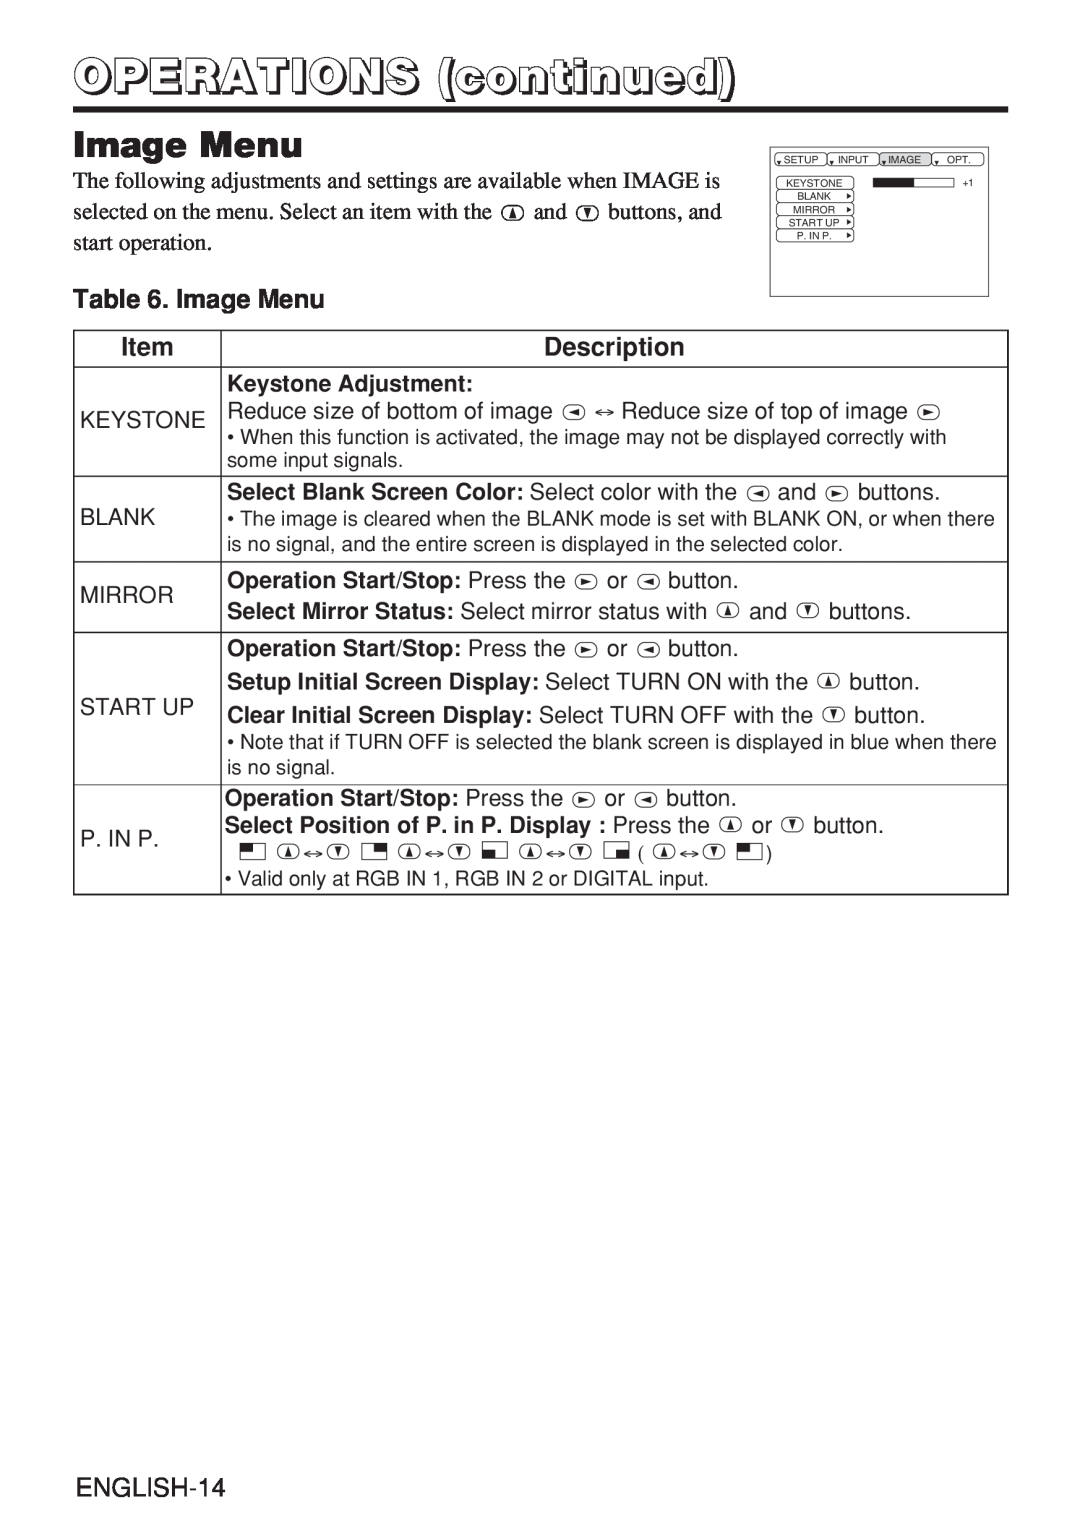 Hitachi CP-X985W user manual Image Menu, OPERATIONS continued, Description 